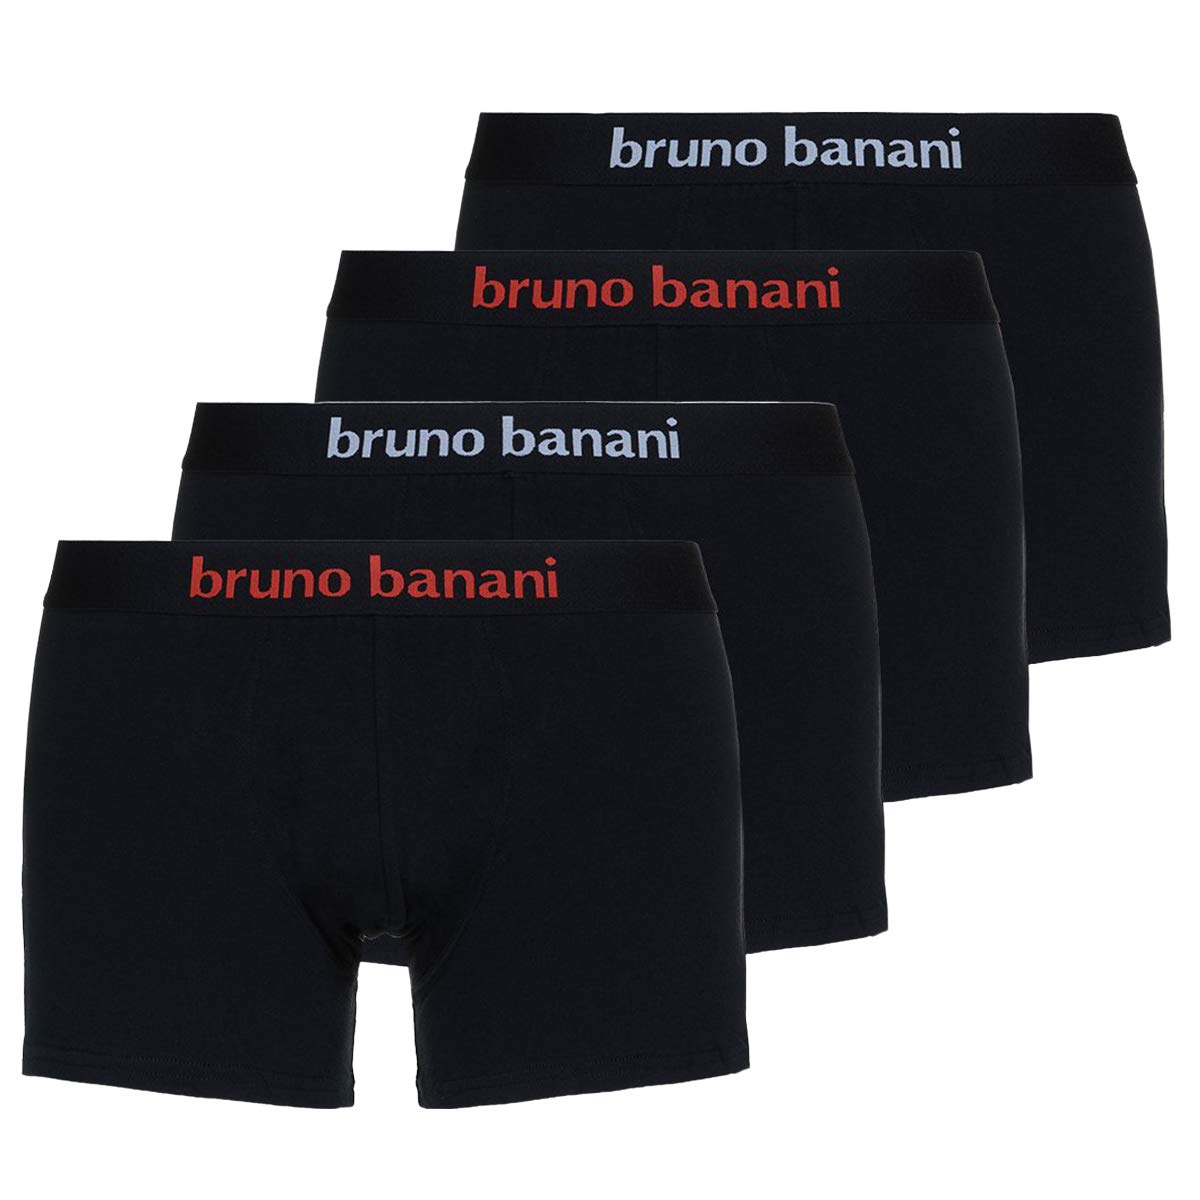 bruno banani - Flowing - Short - 4er Pack (8 Schwarz / Grau Melange)